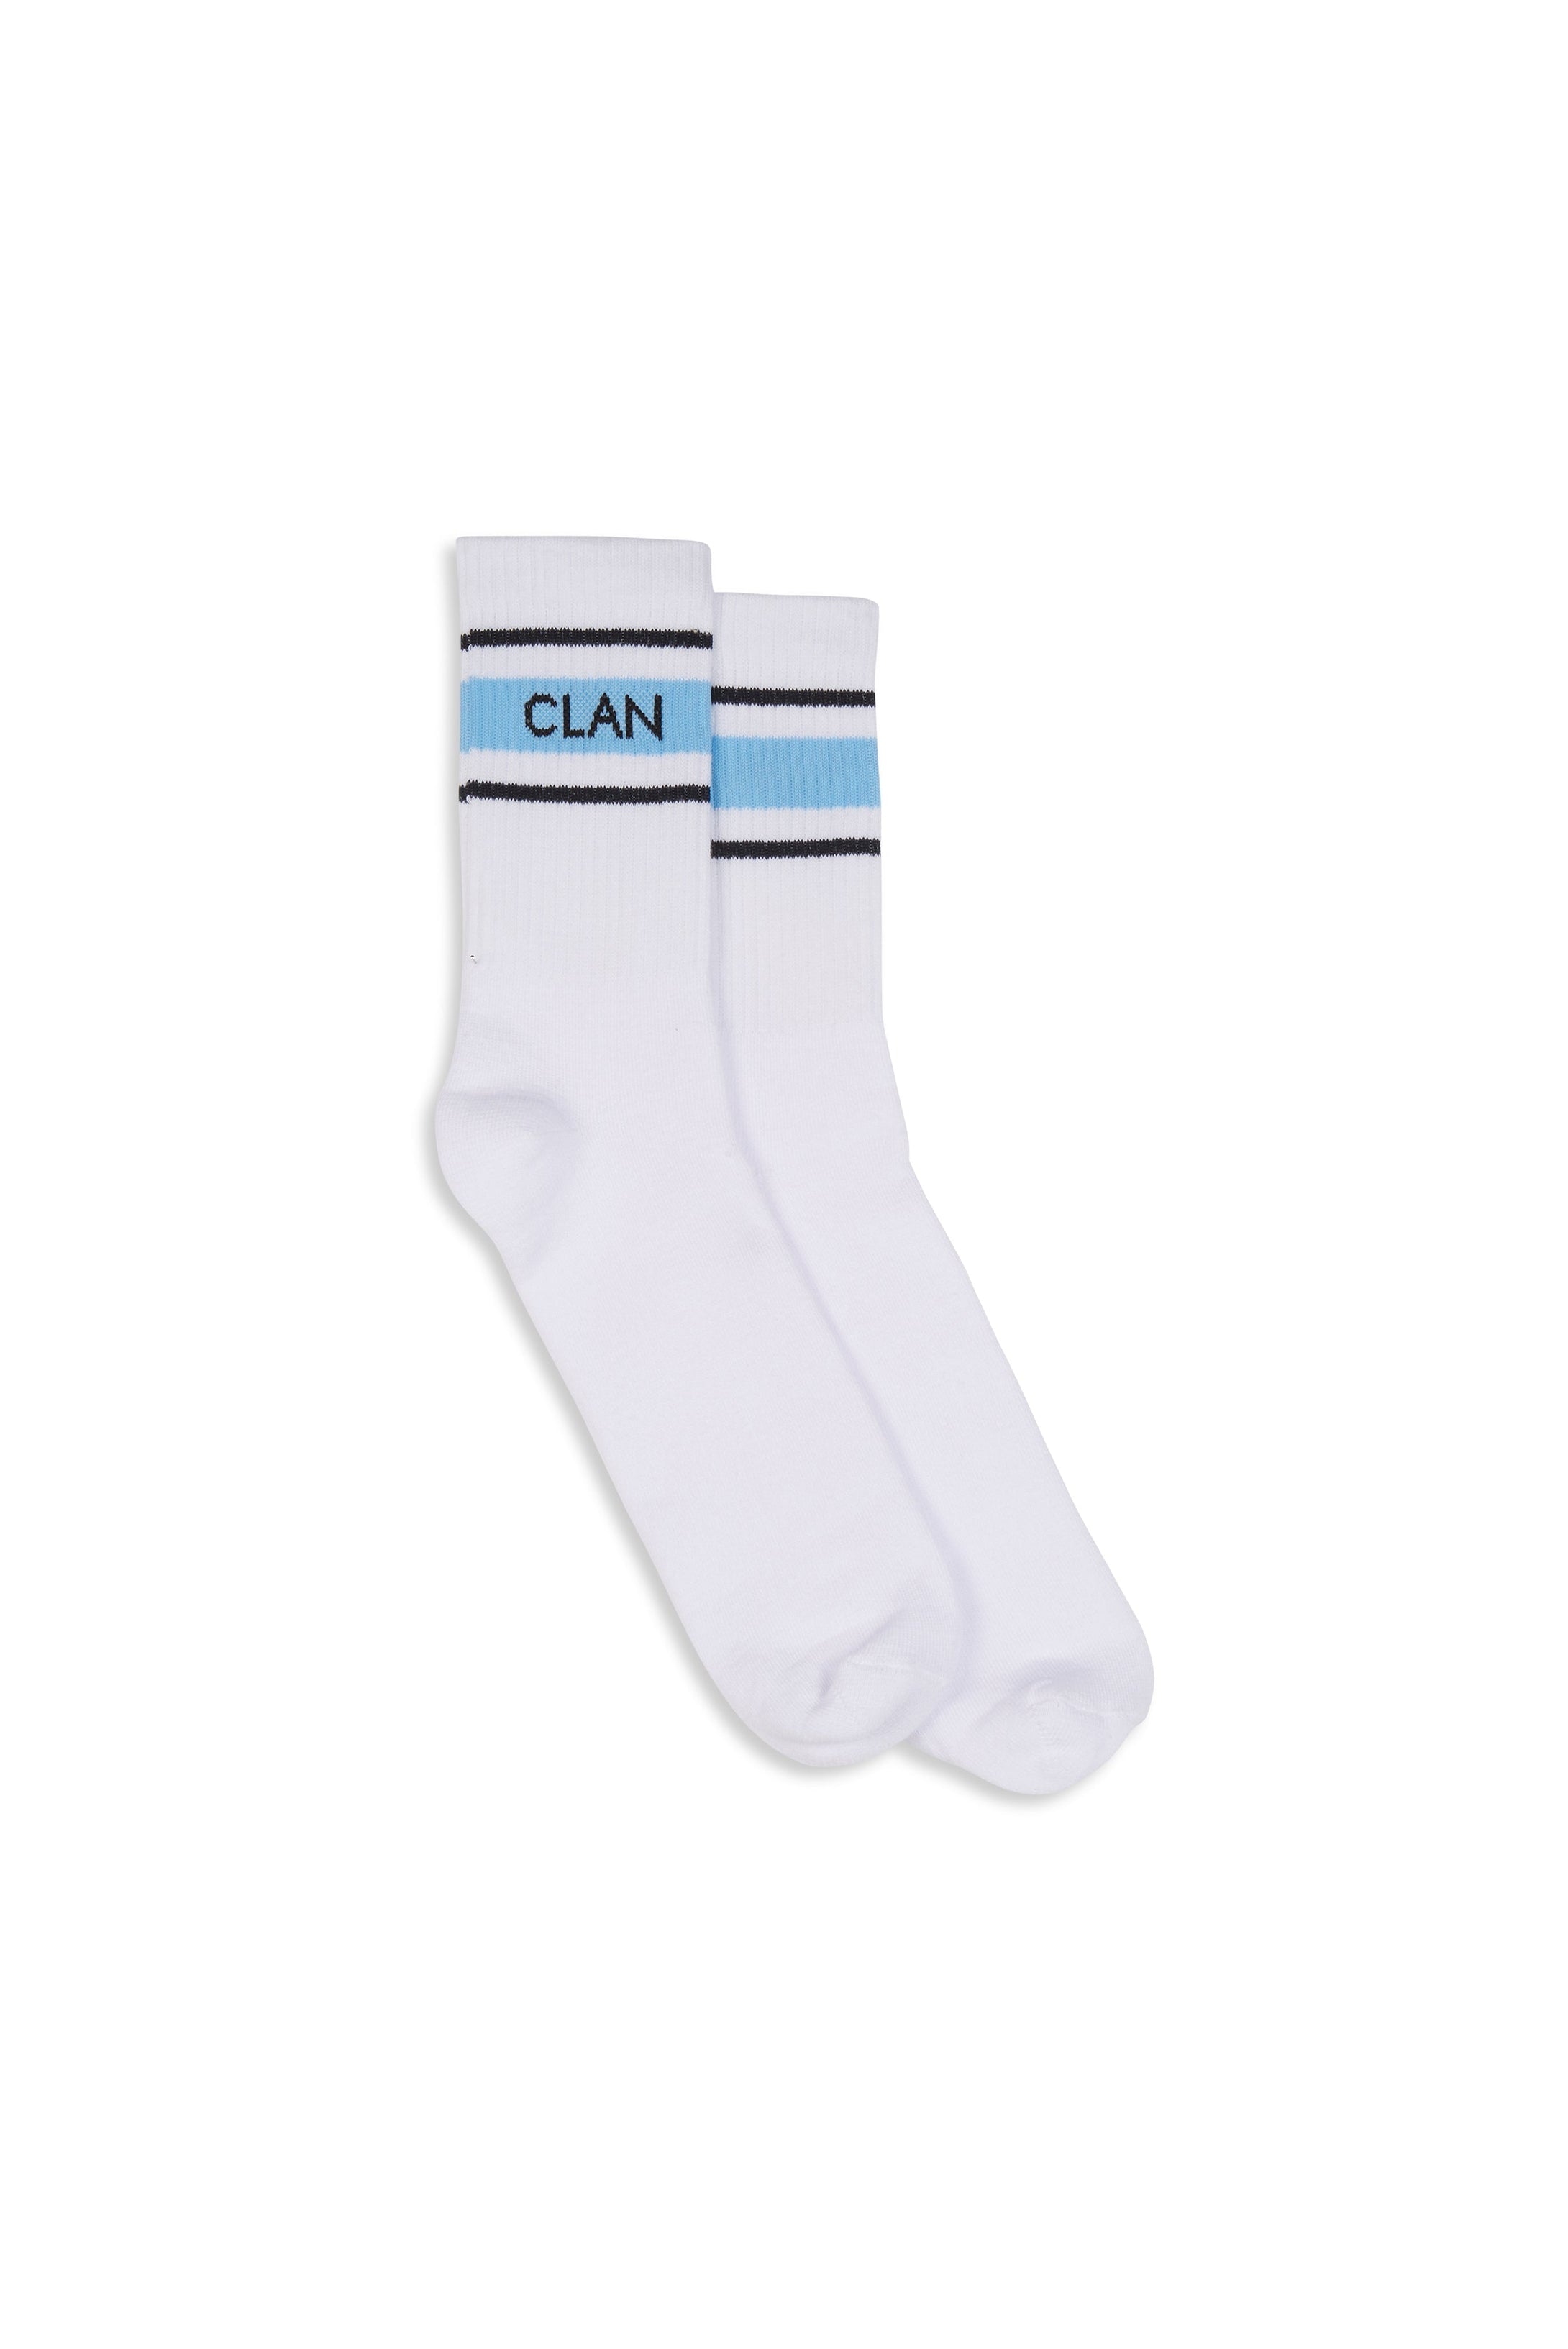 Socks Clan Upstairs